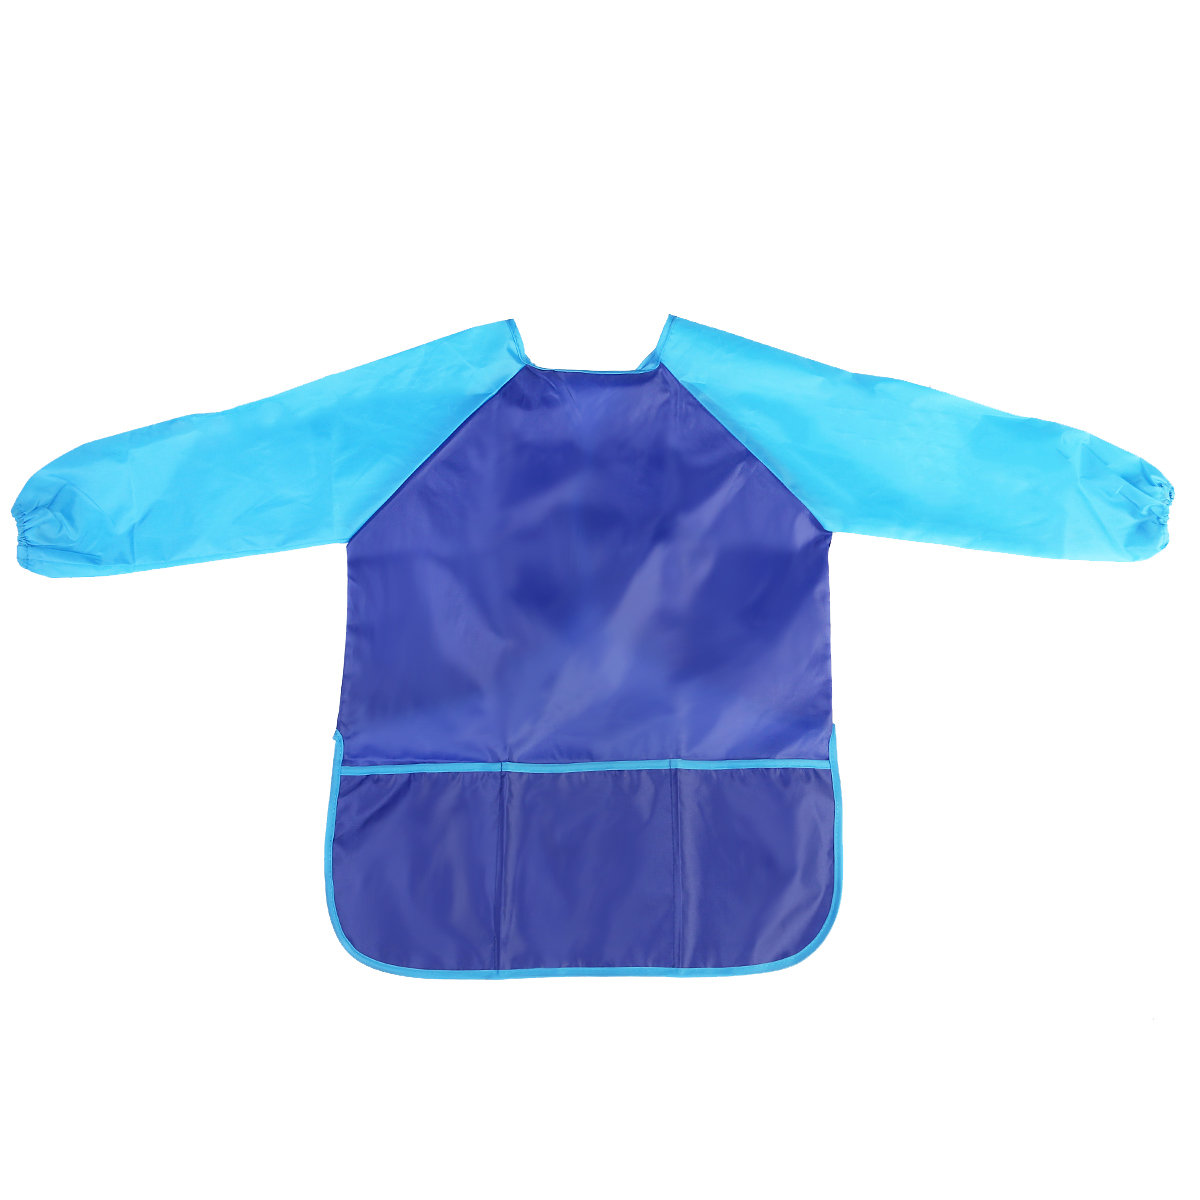 Nuolux Children Kids Waterproof Long-sleeved Art Smock Painting Apron Plus Size (Blue), Size: 105.00